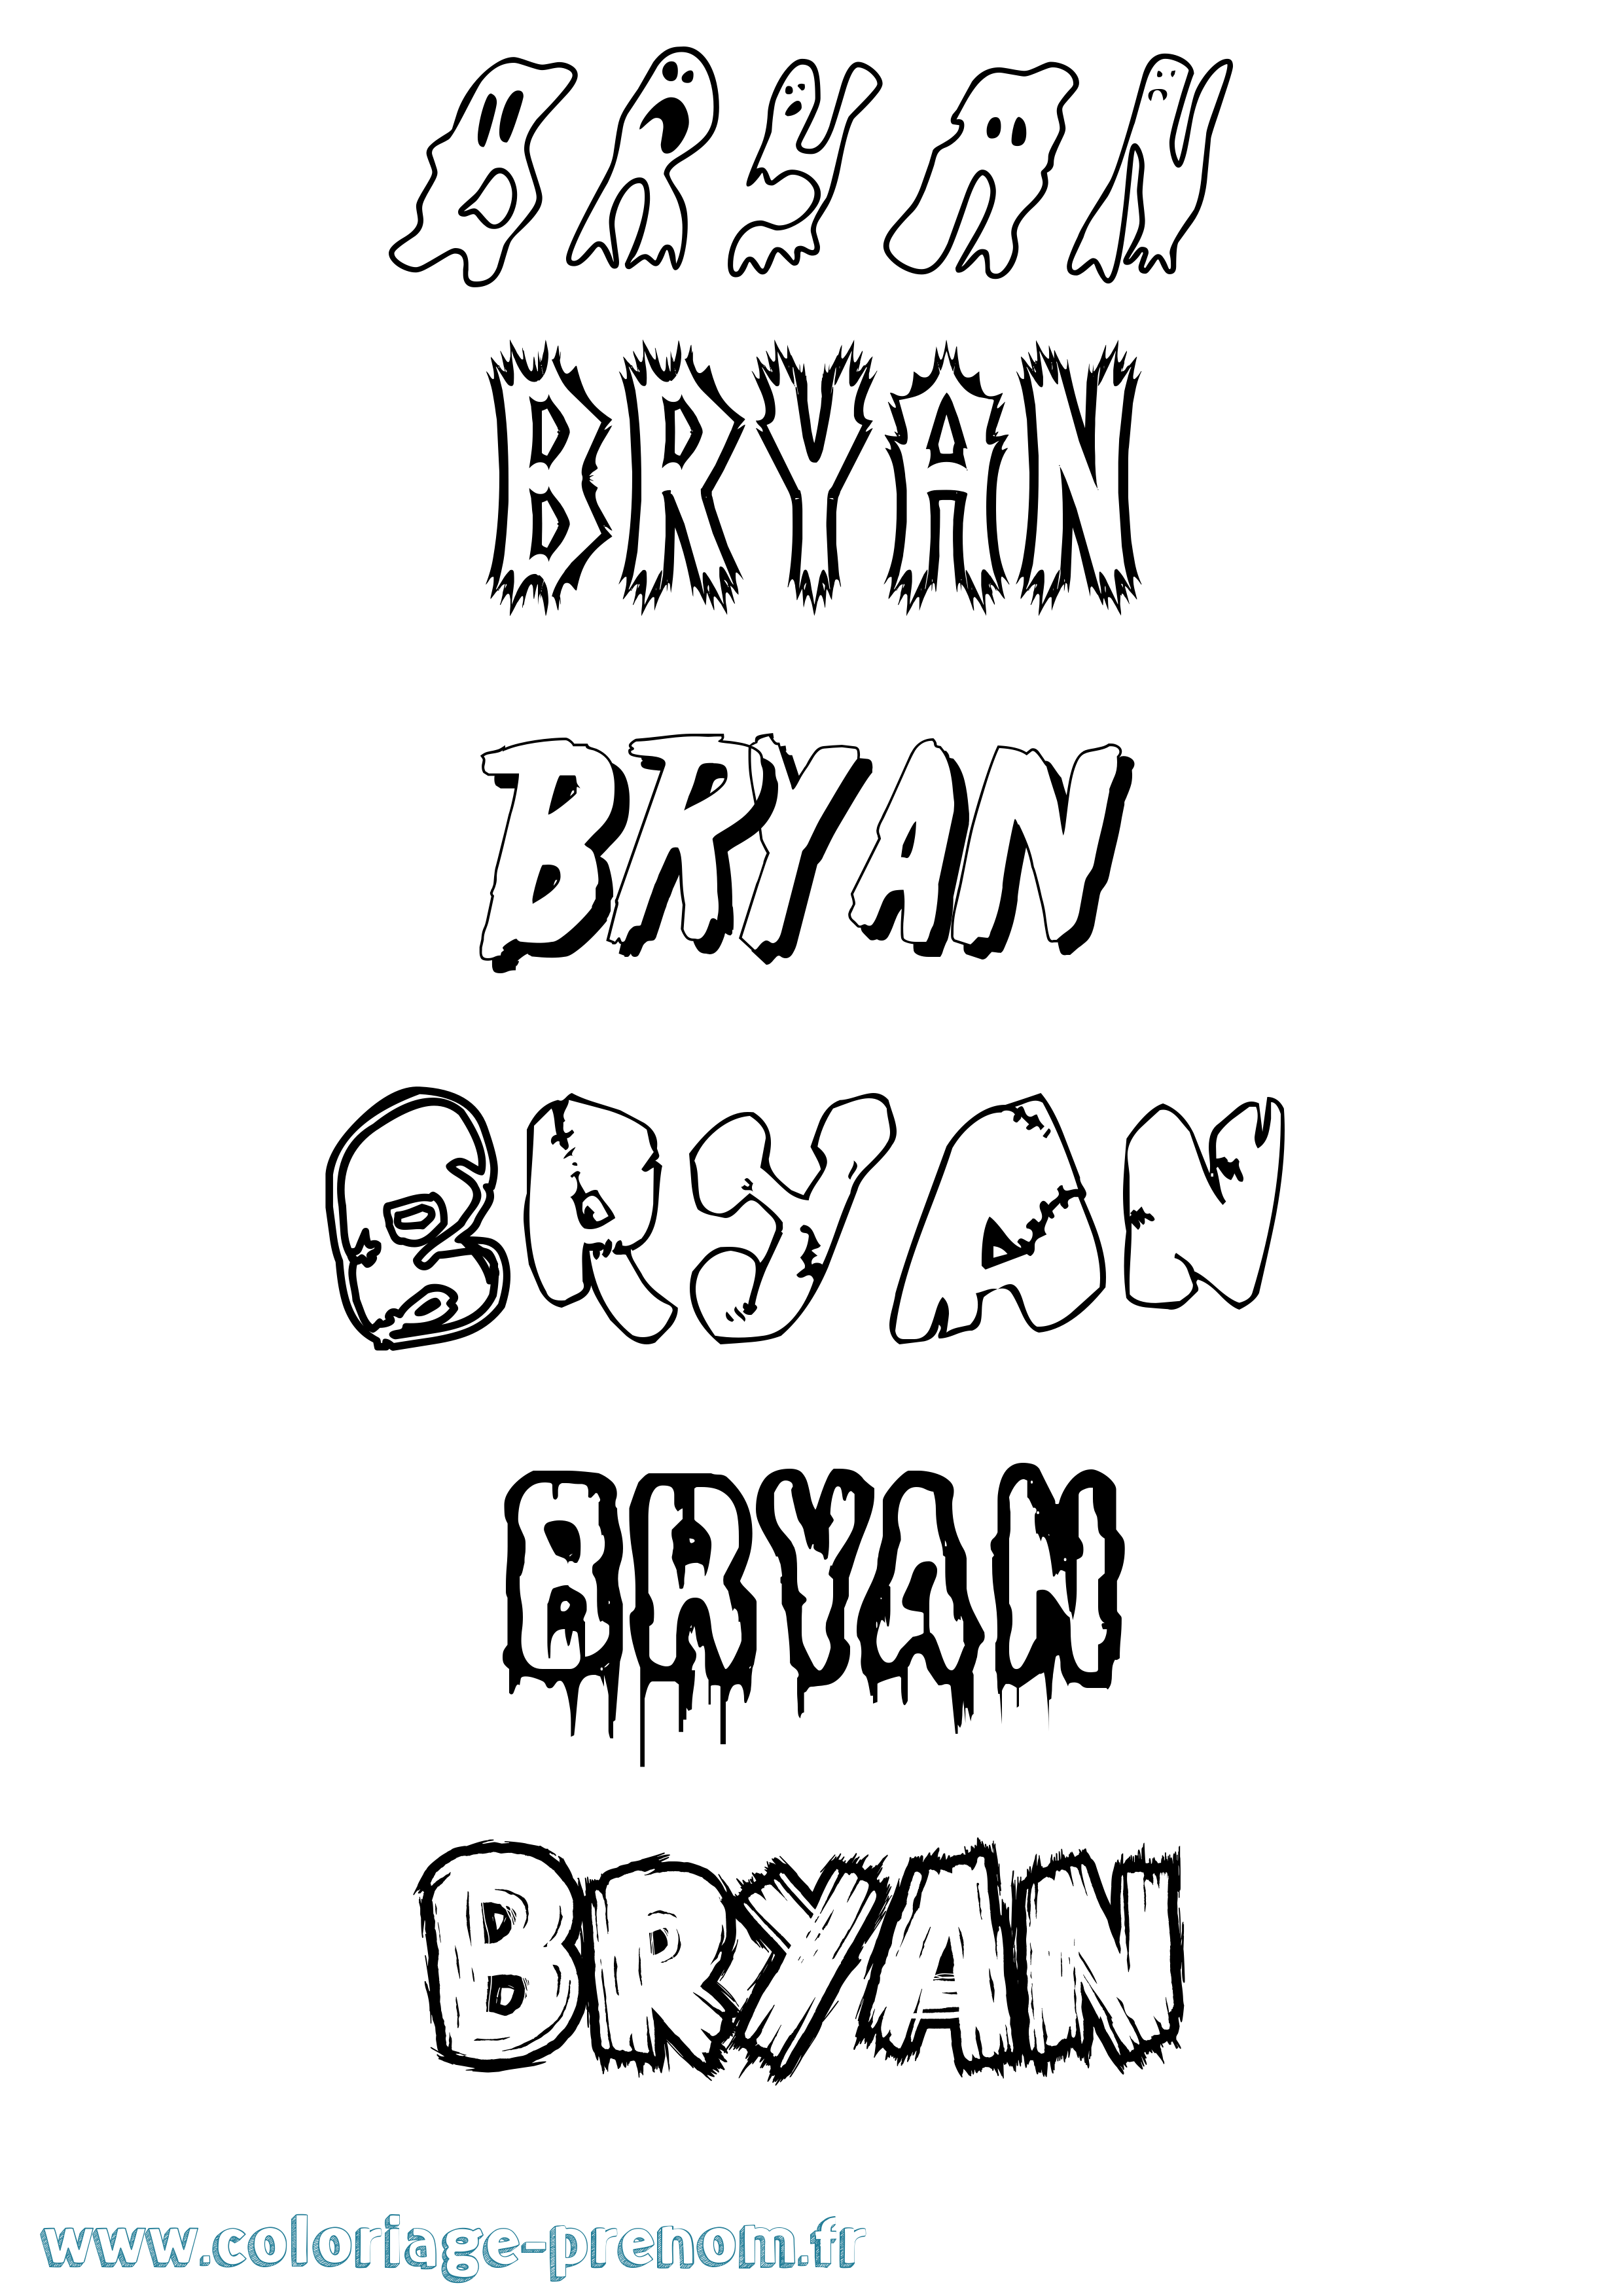 Coloriage prénom Bryan Frisson